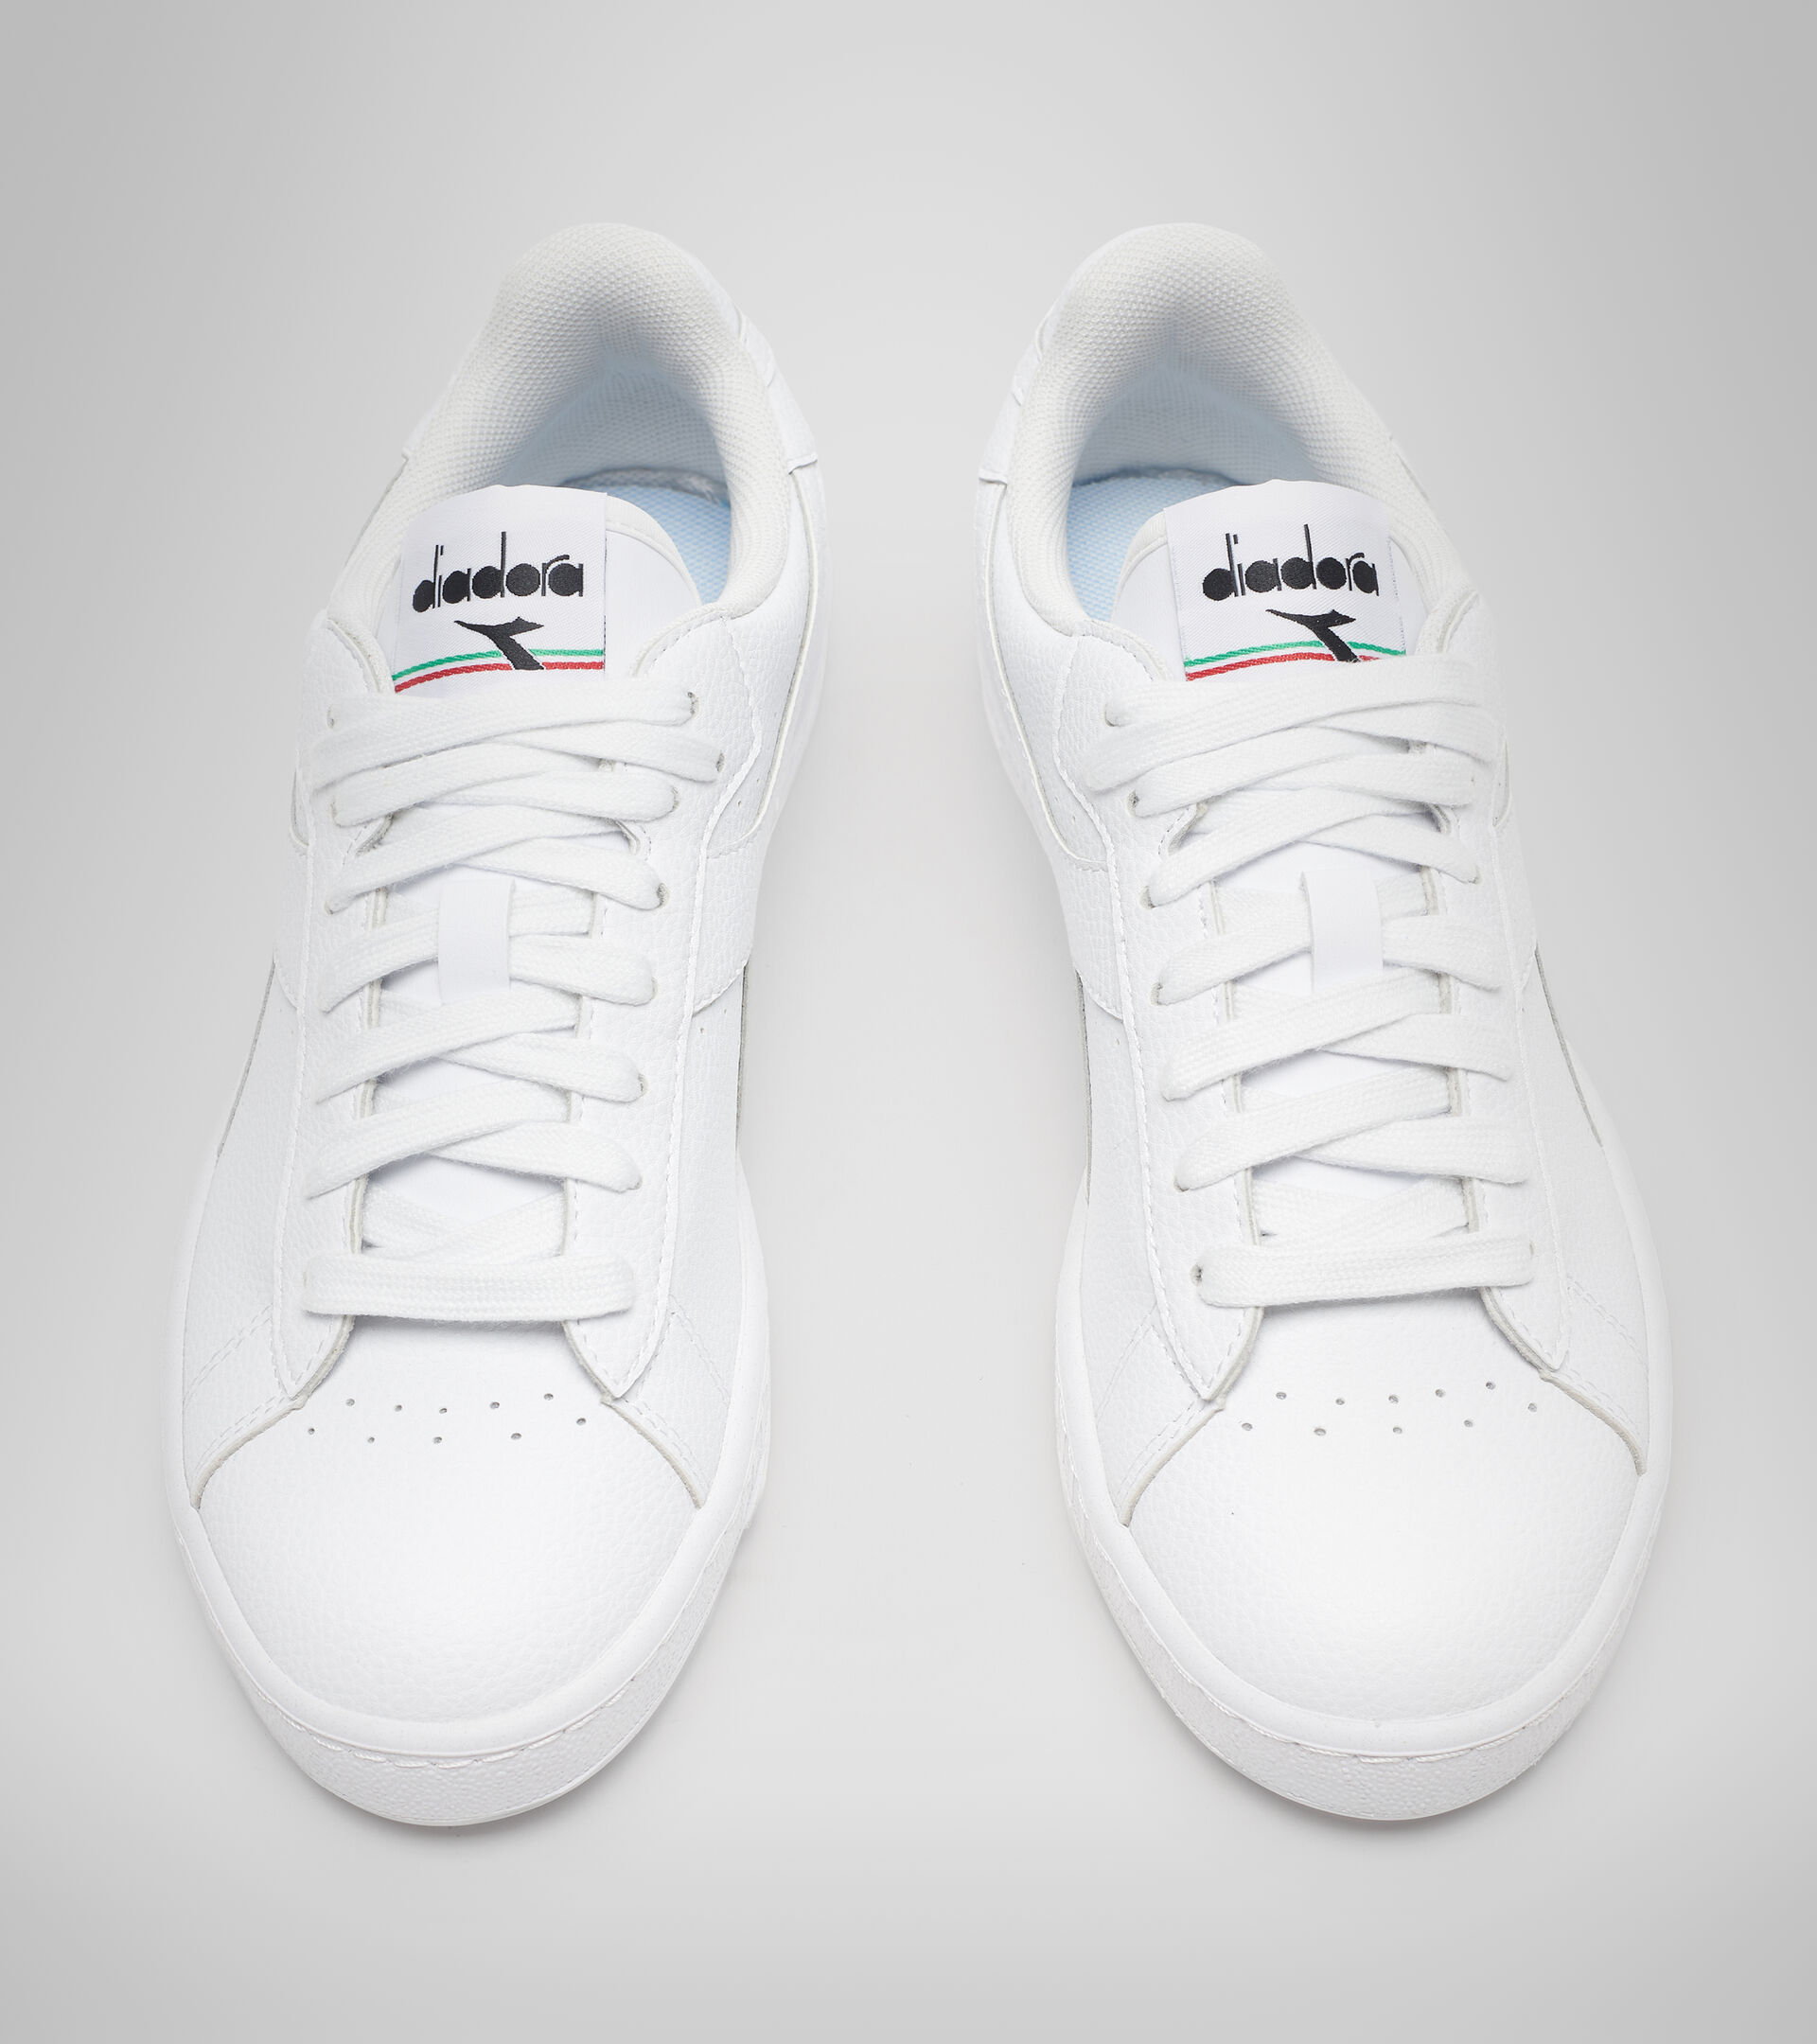 Sportswear shoe - Unisex GAME L LOW 2030 OPTICAL WHITE - Diadora